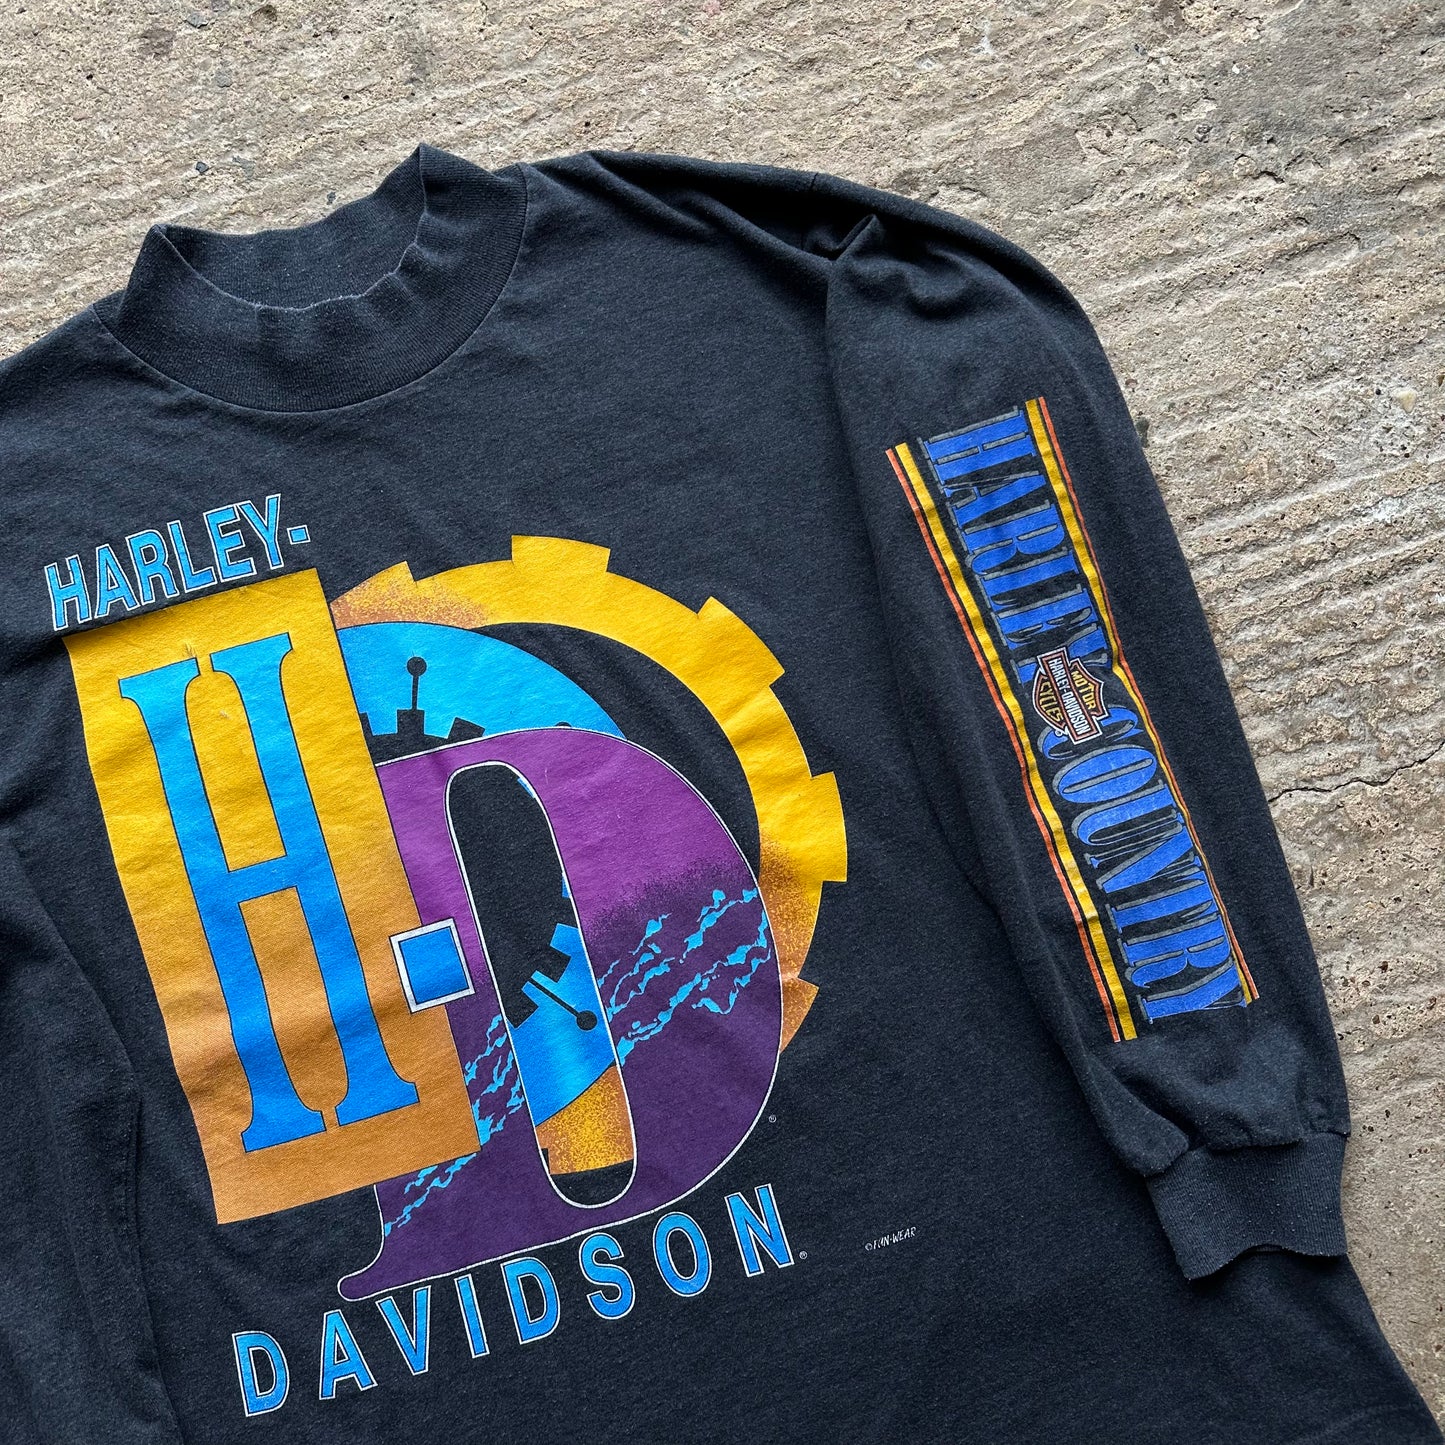 Harley Davidson - 'Harley Country' - 90's - L